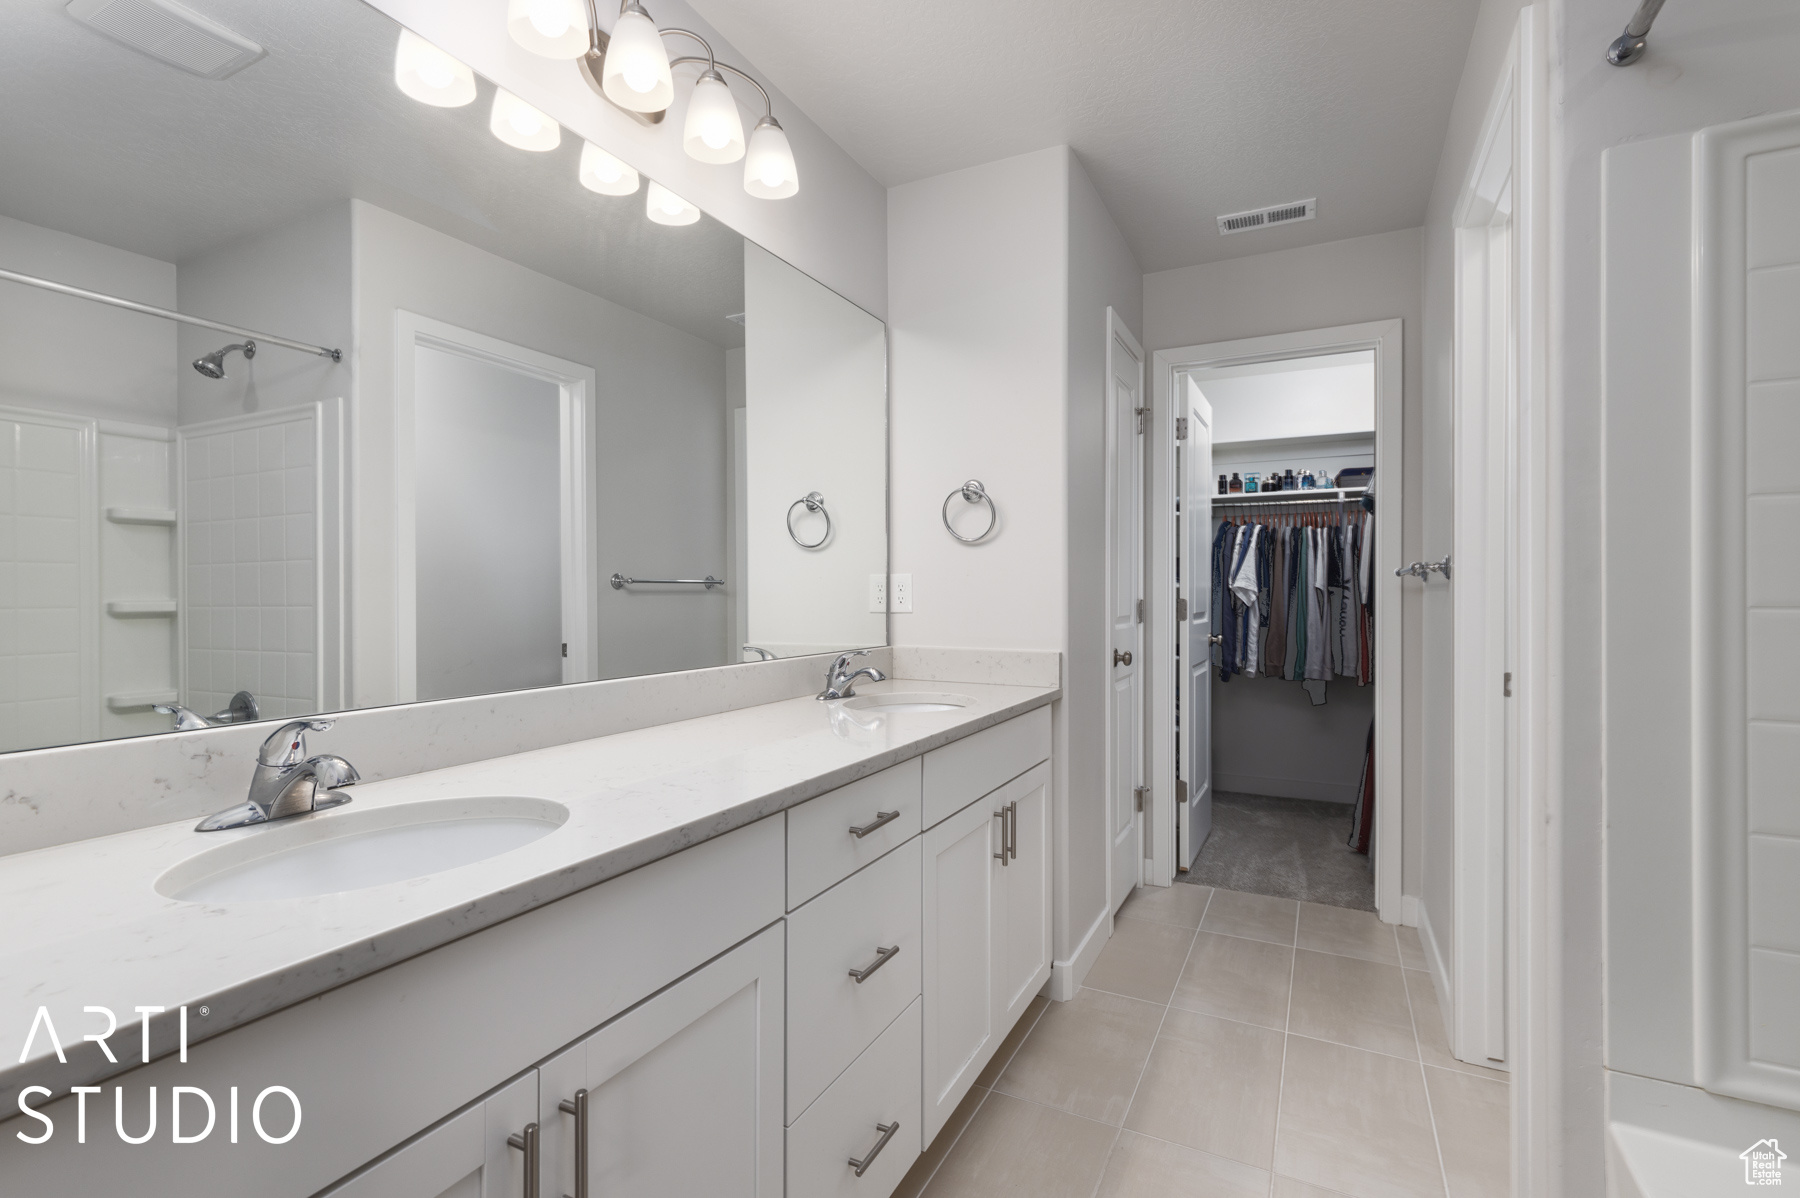 Bathroom with double sink, tile floors, and oversized vanity